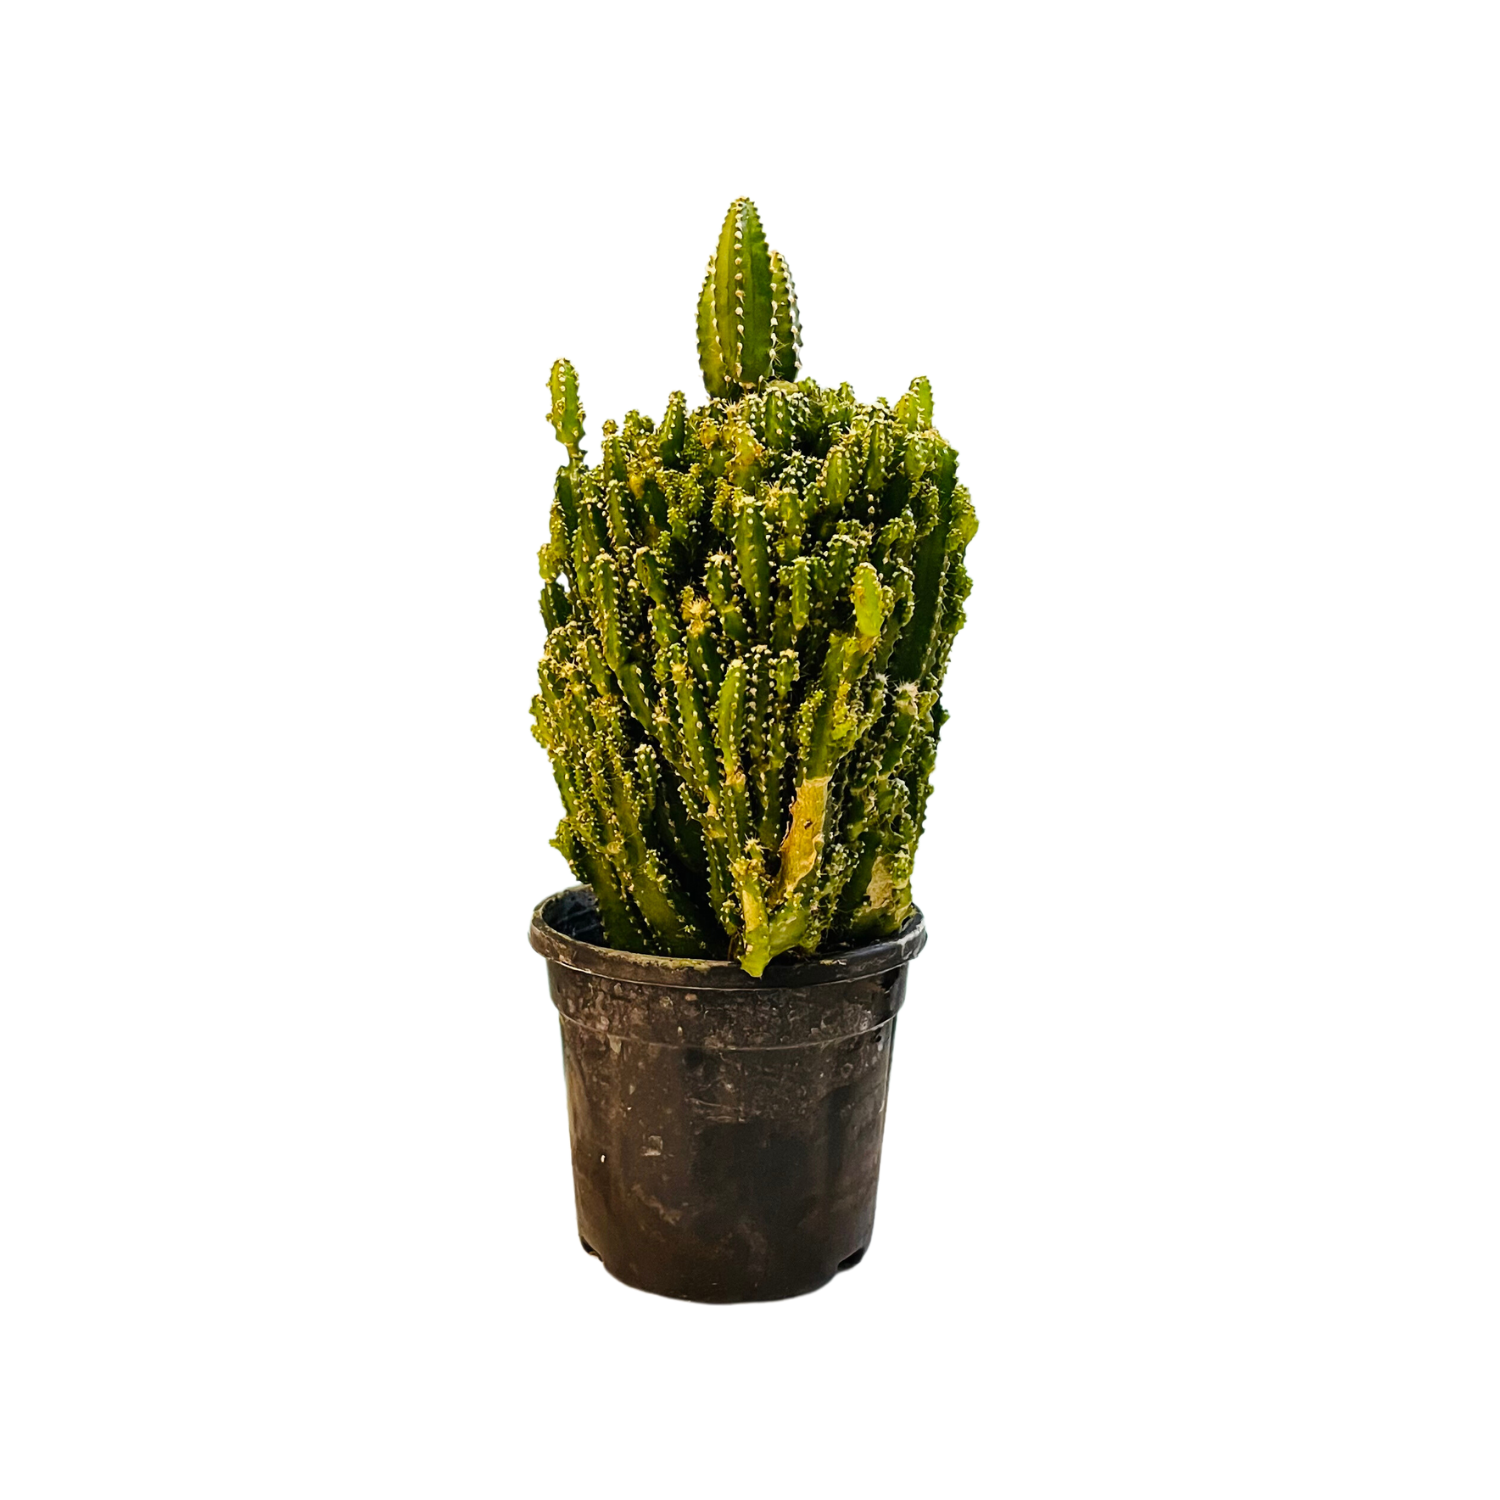 Cereus Fairy Castle Cactus Live Plant in 4 Inch Pot